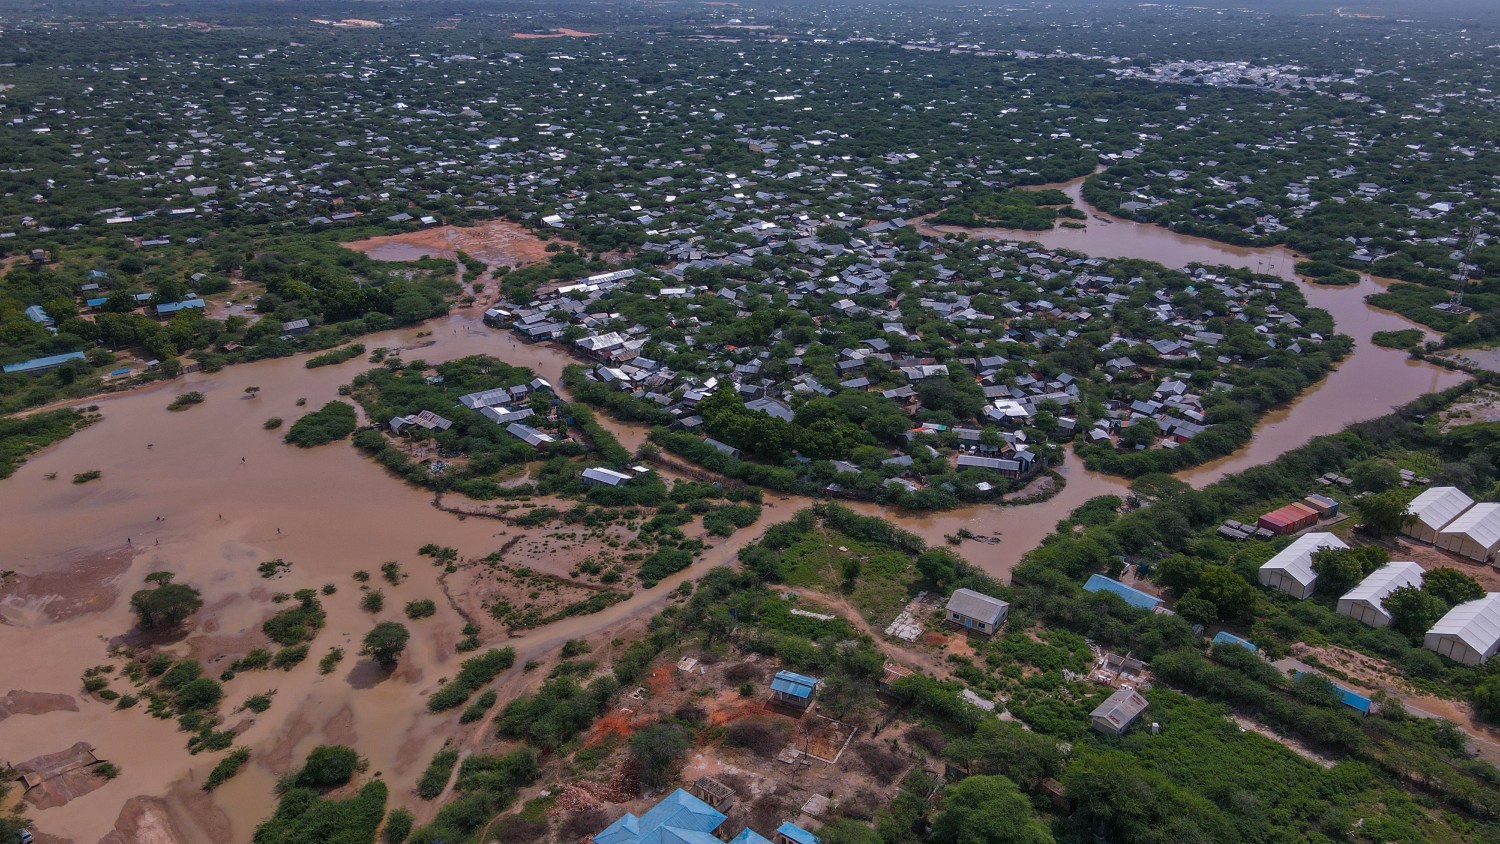 campos de refugiados de Dadaa (Kenia) inundados